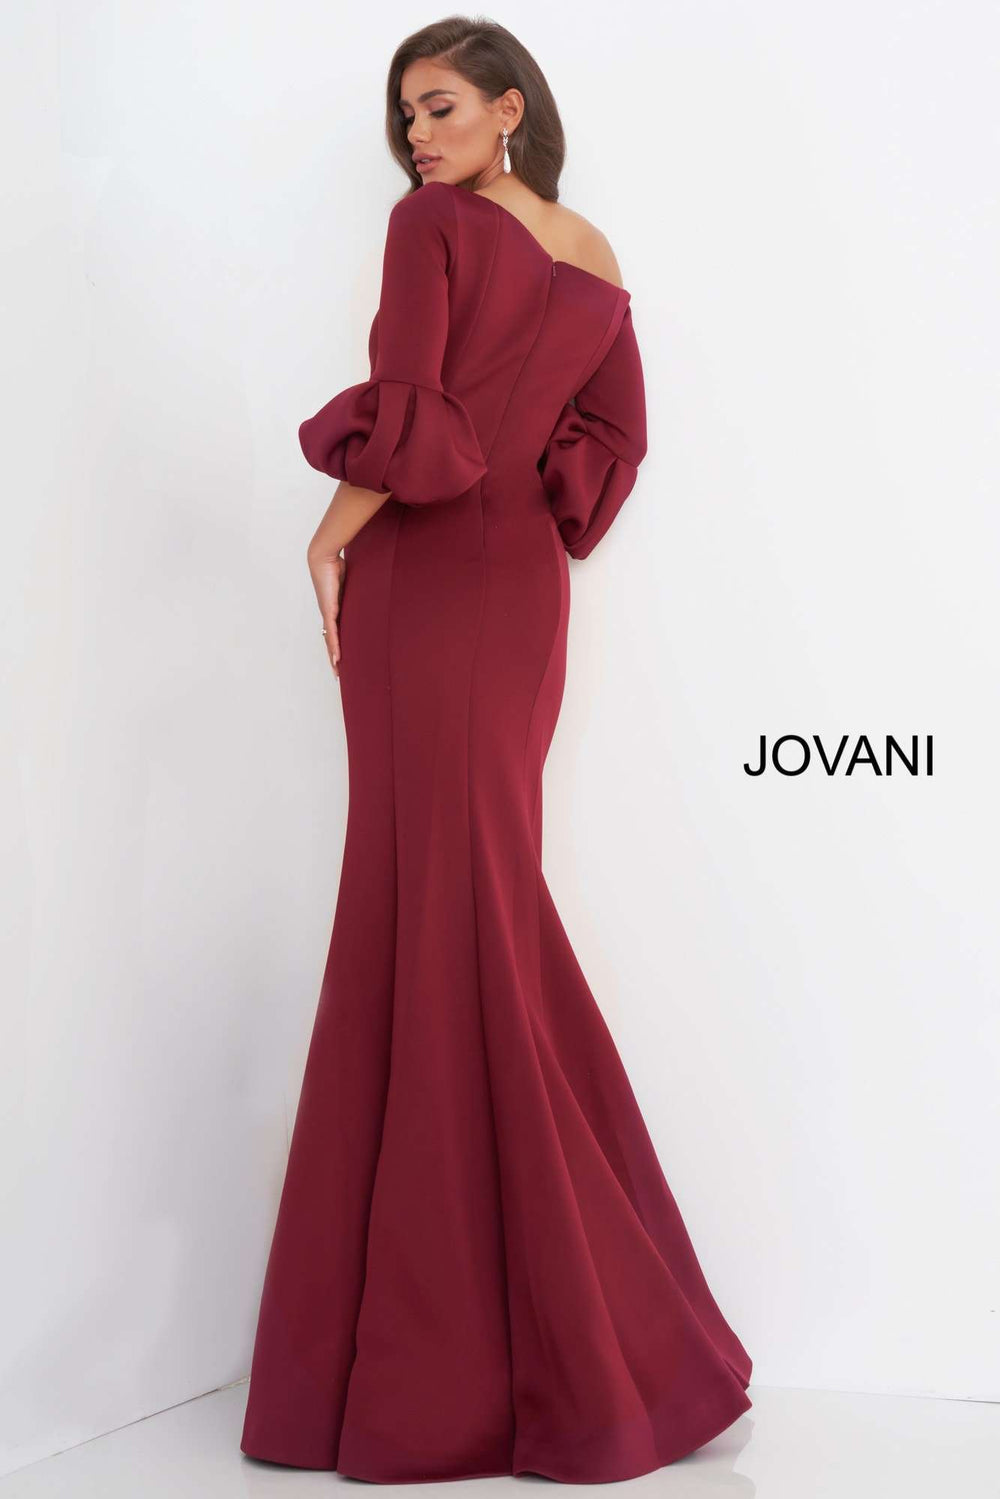 CL - One Shoulder Scuba Prom Dress Jovani 39739 - Morvarieds Fashion